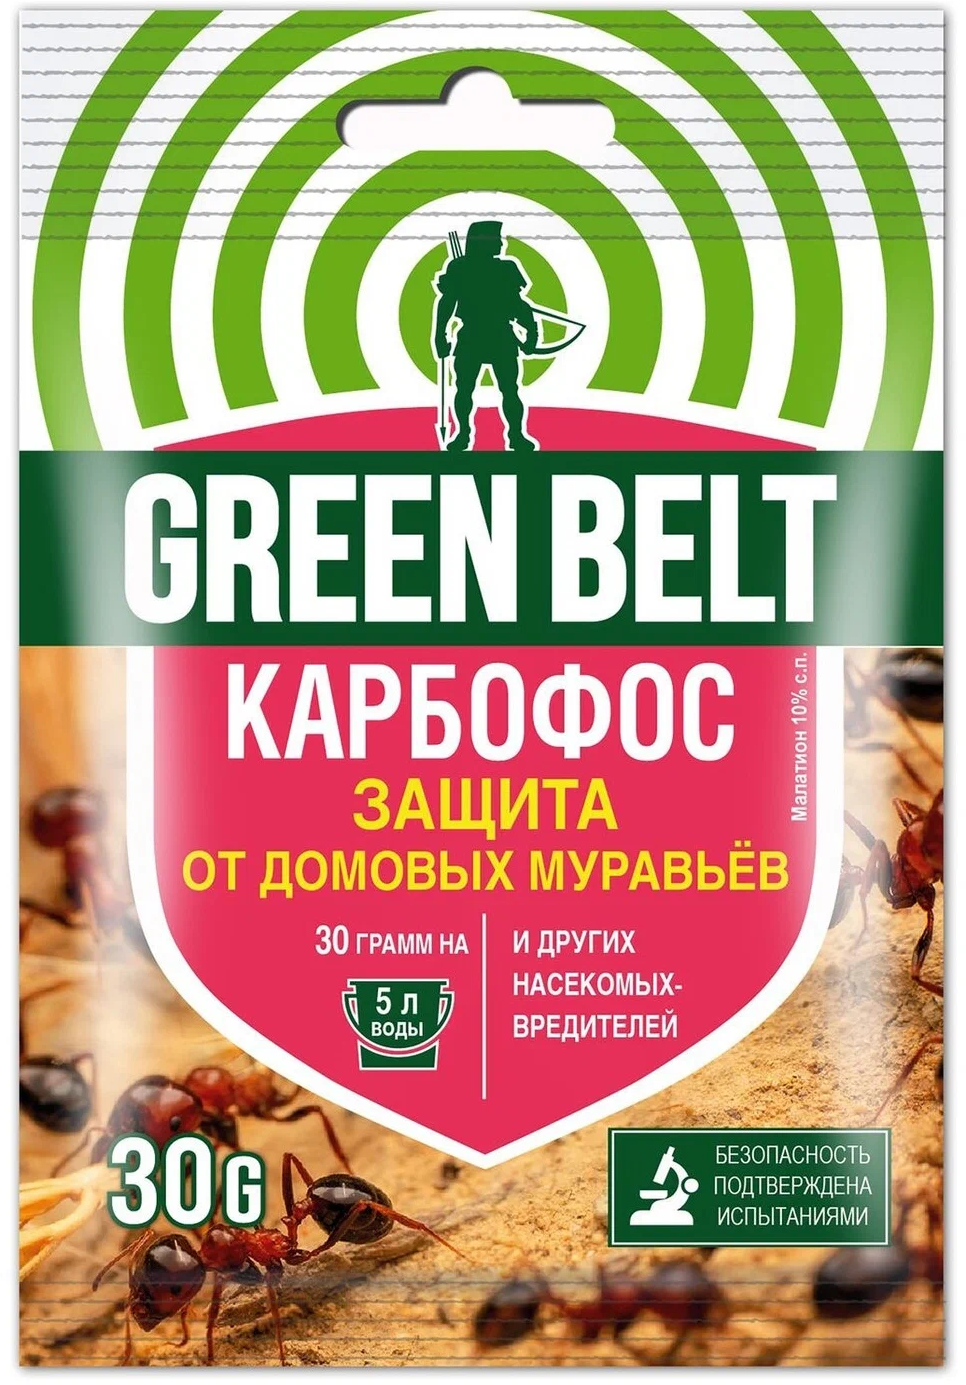 Комплект Карбофос Green Belt 30 гр. х 3 шт. - фотография № 1